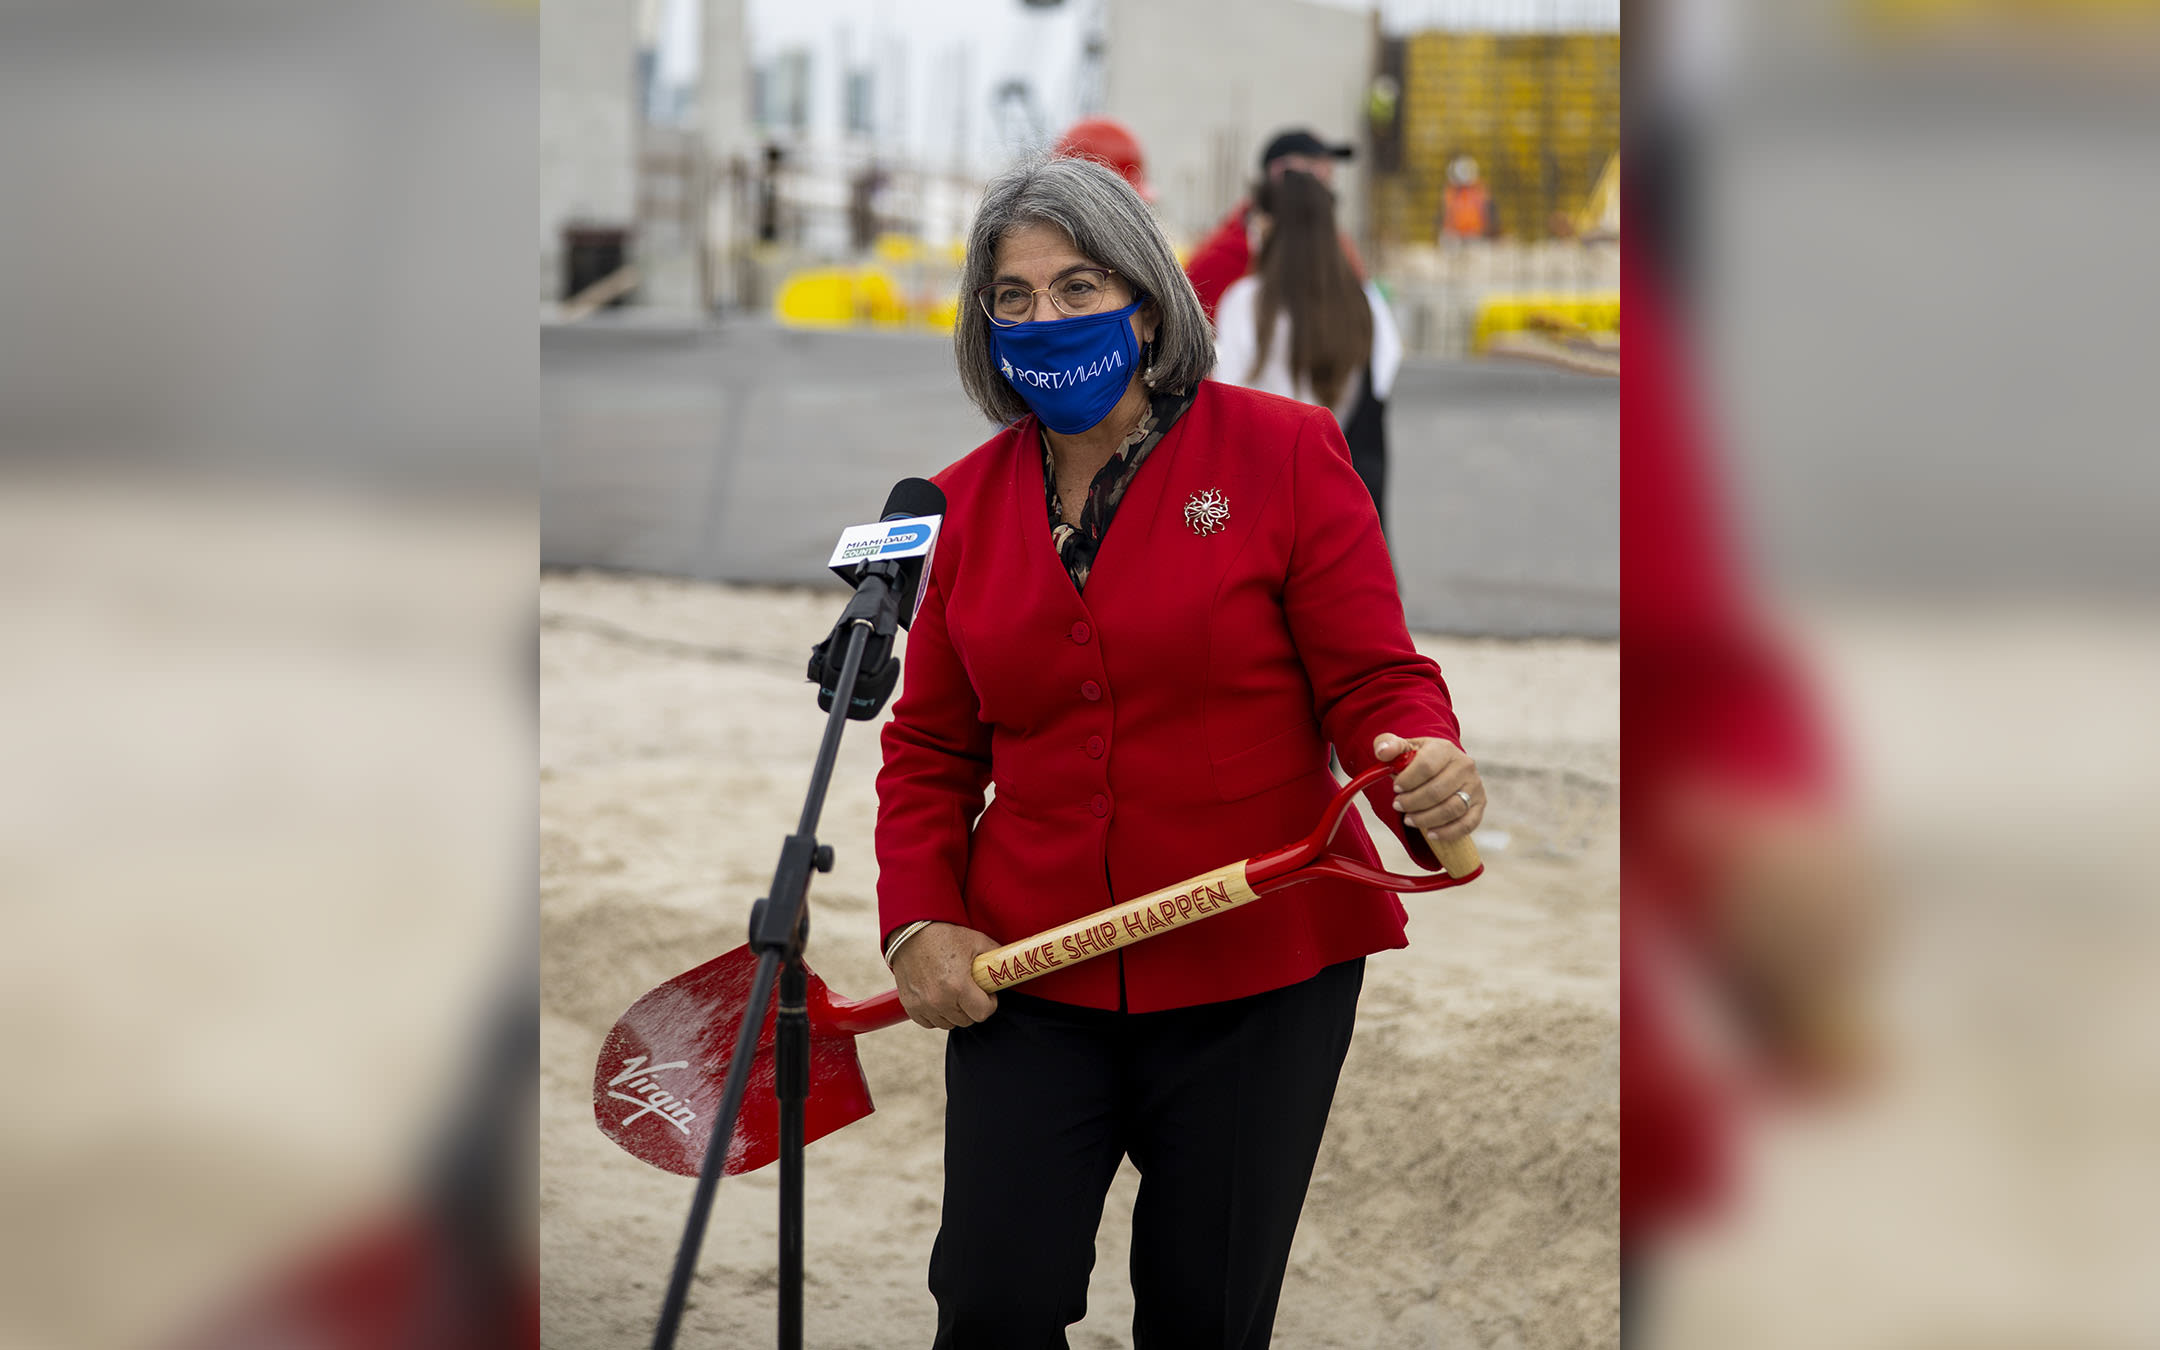 Miami-Dade Mayor Daniella Levine Cava at the breaking ground ceremony at PortMiami, holding a Virgin Voyages shovel